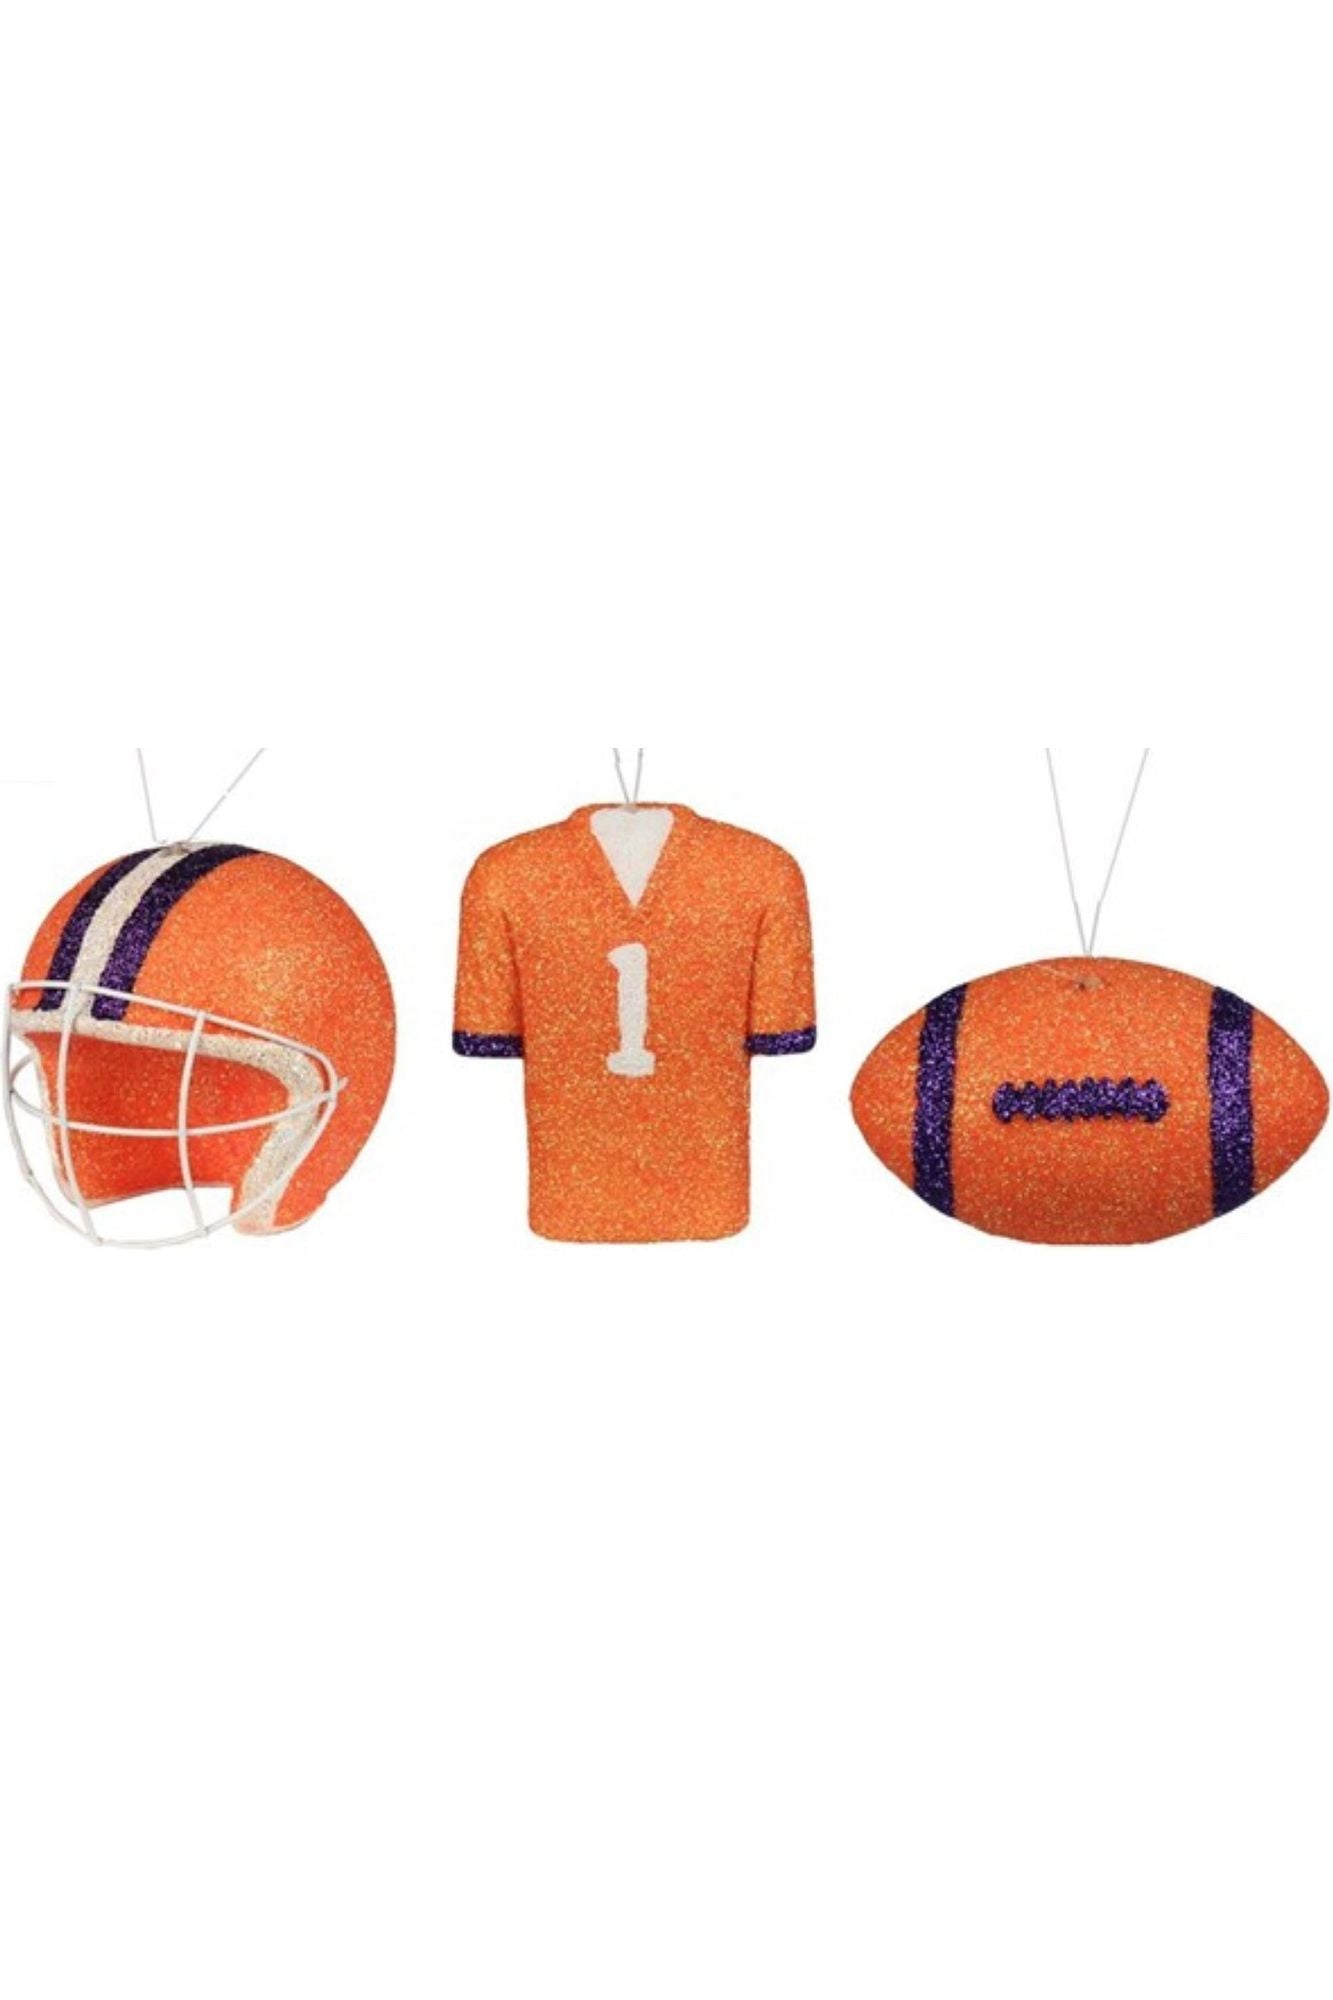 Shop For Glitter Football Ornament Assortment: Orange & Purple (Set of 3) MS1301F8